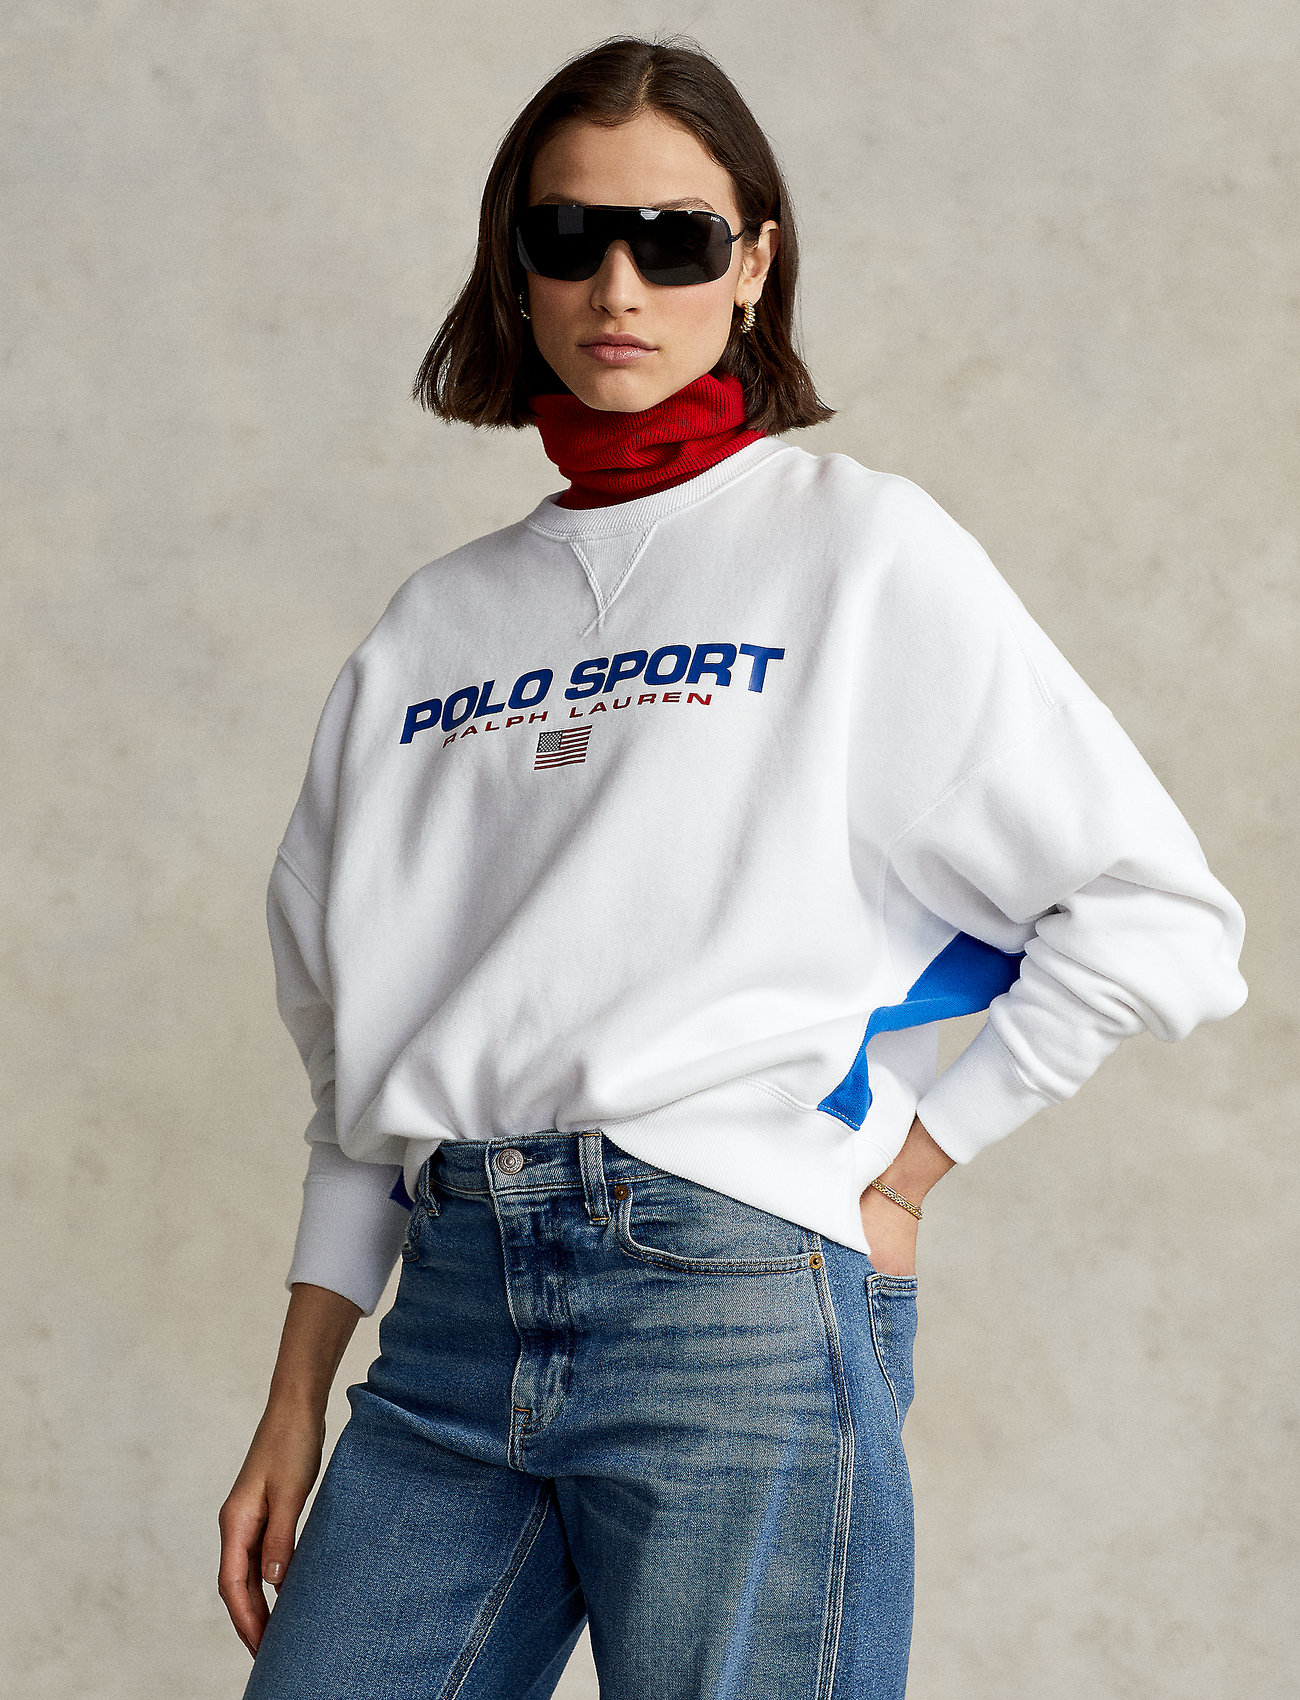 Polo Ralph Lauren Polo Sport Contrast Fleece Sweatshirt - Sweatshirts -  